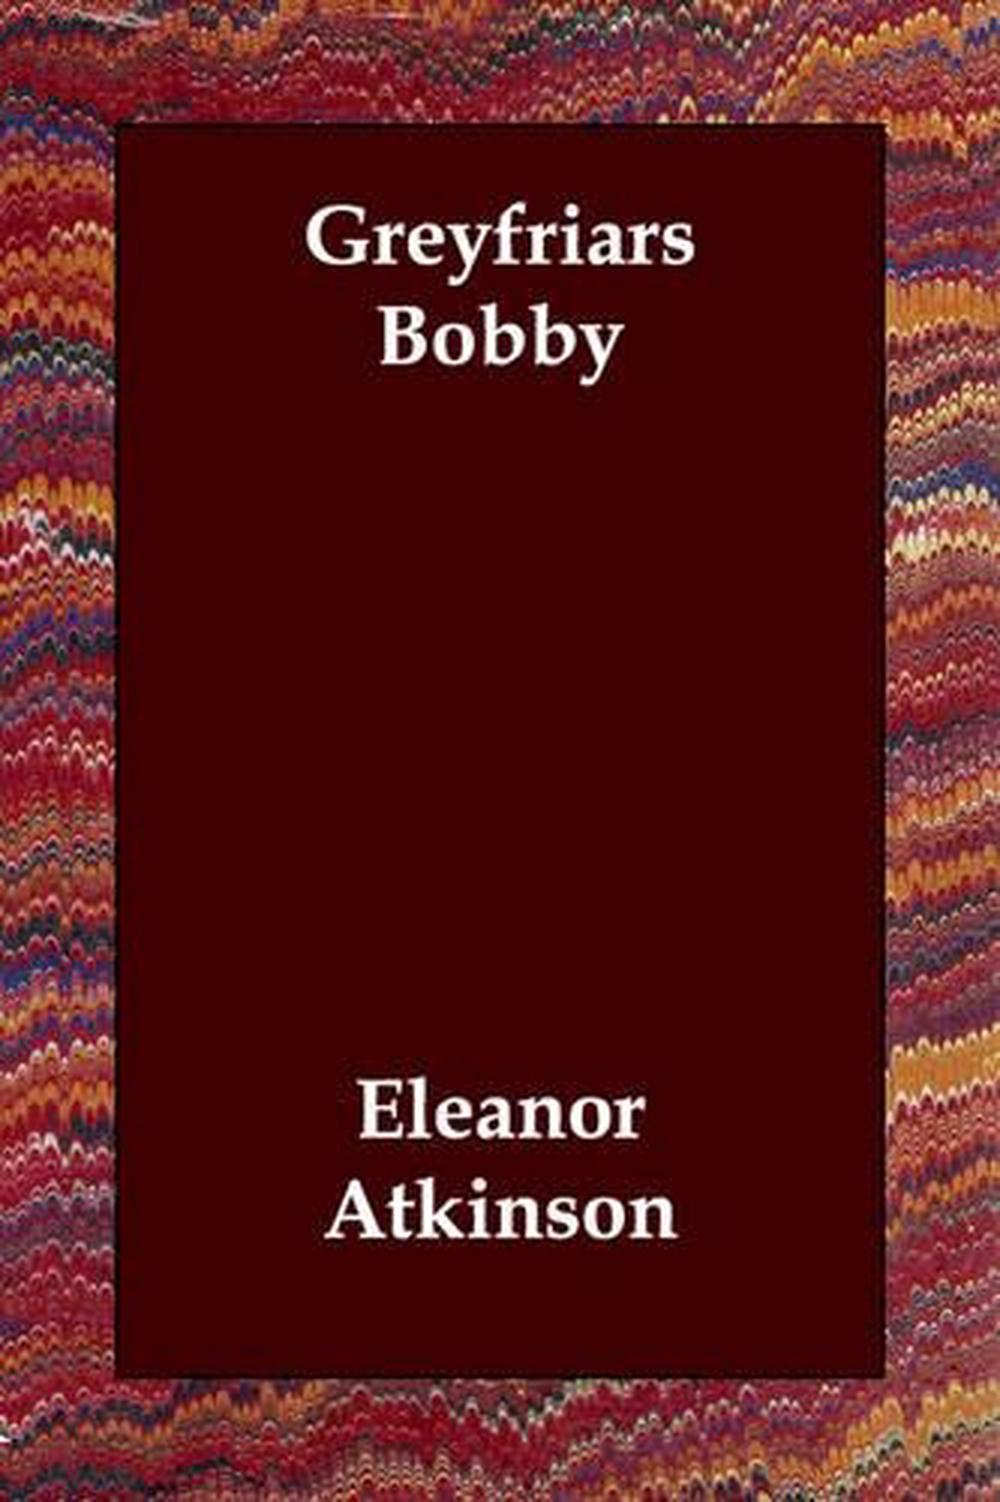 greyfriars bobby by eleanor atkinson